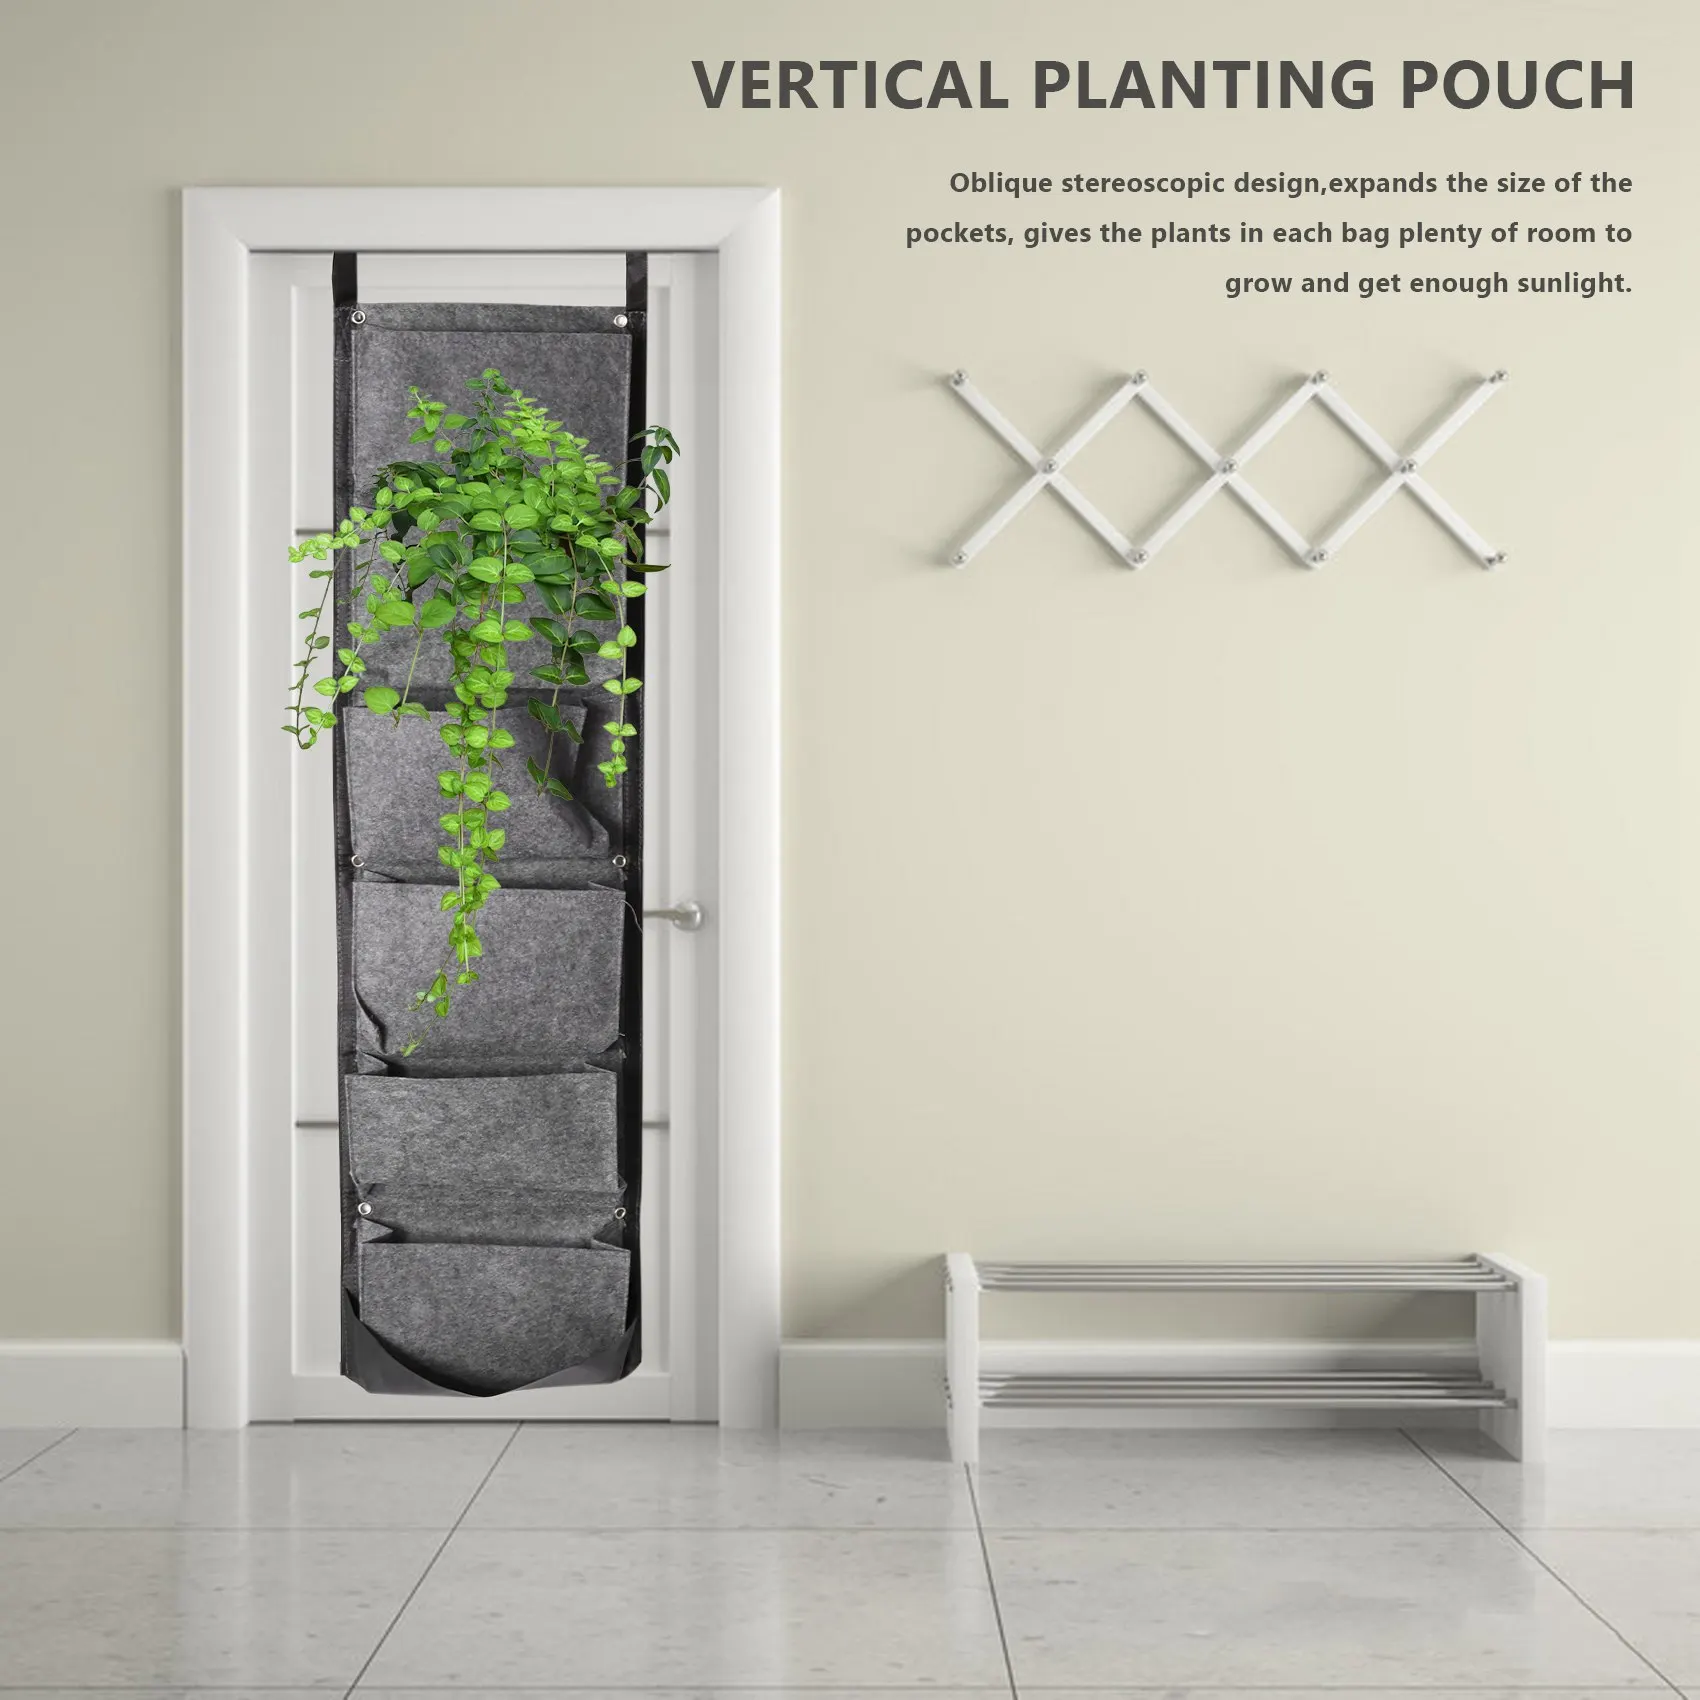 2PCS ​Vertical Planting Pouch 6 Pockets Wall Hanging Garden Planter Flower Pots Large Felt Bags for Home Garden Decor